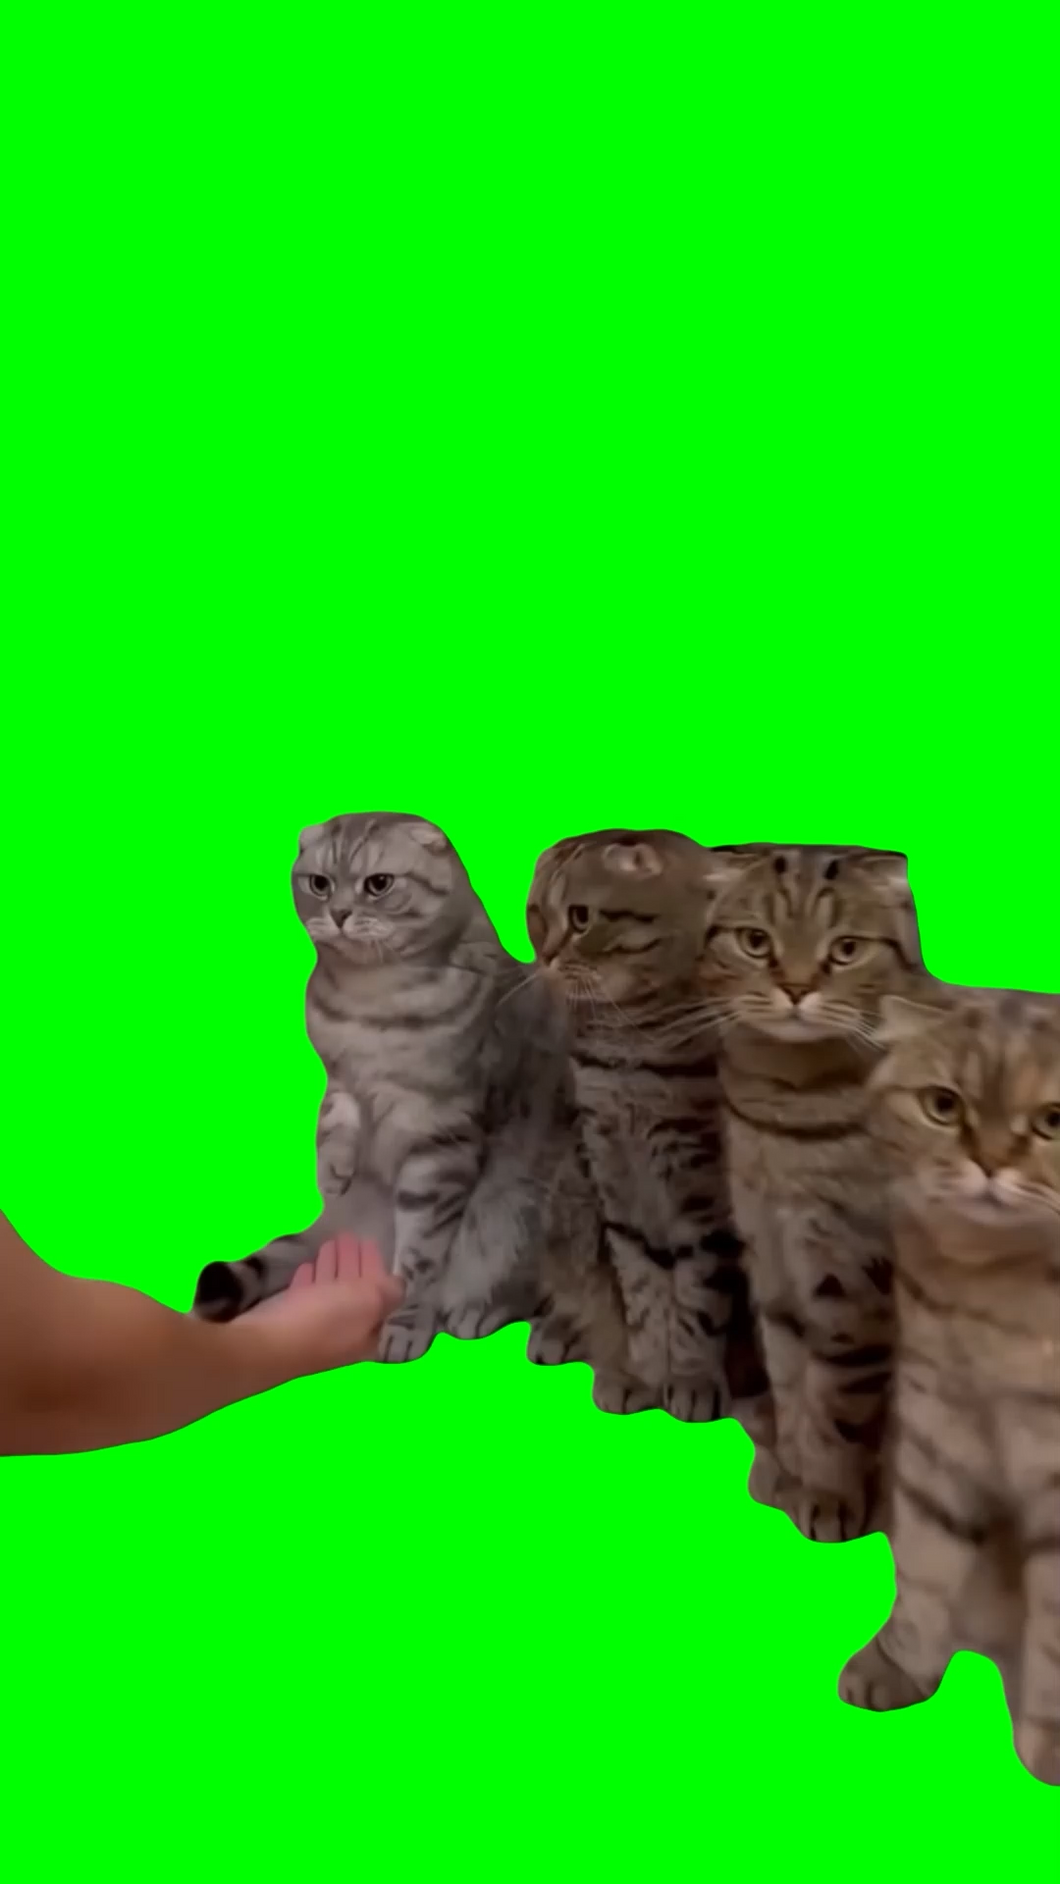 Cats getting handshakes (Green Screen)